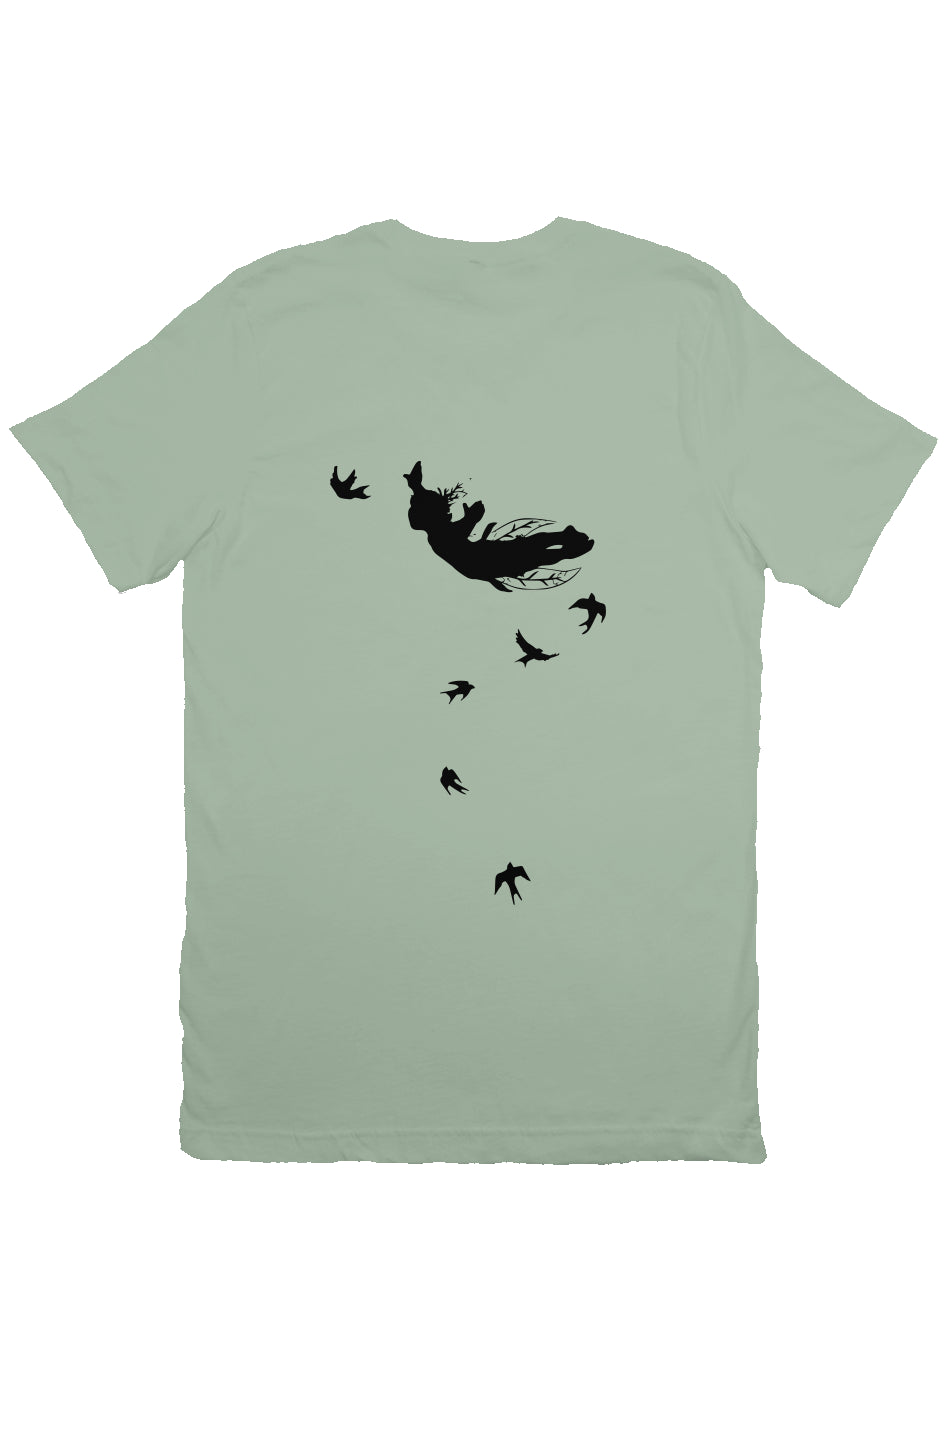 Peter Pan Unisex Adult T-shirt sage